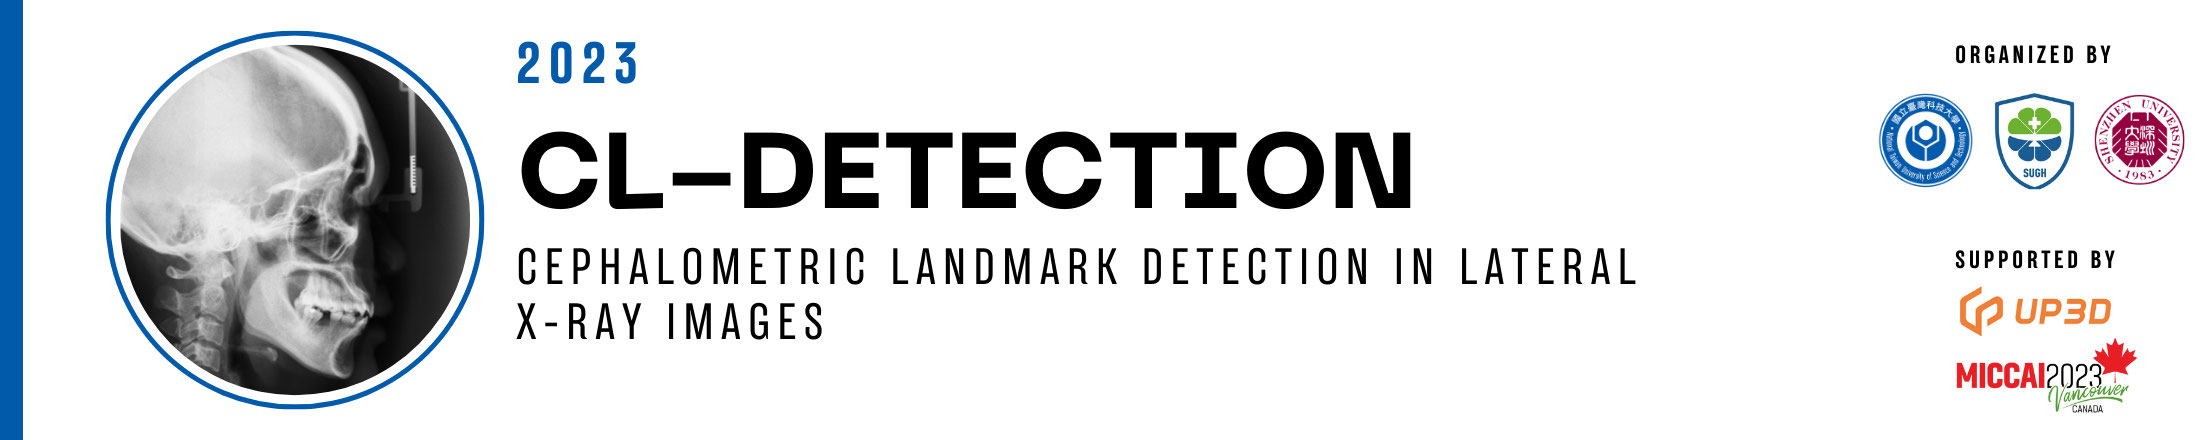 CL-Detection 2023 Banner